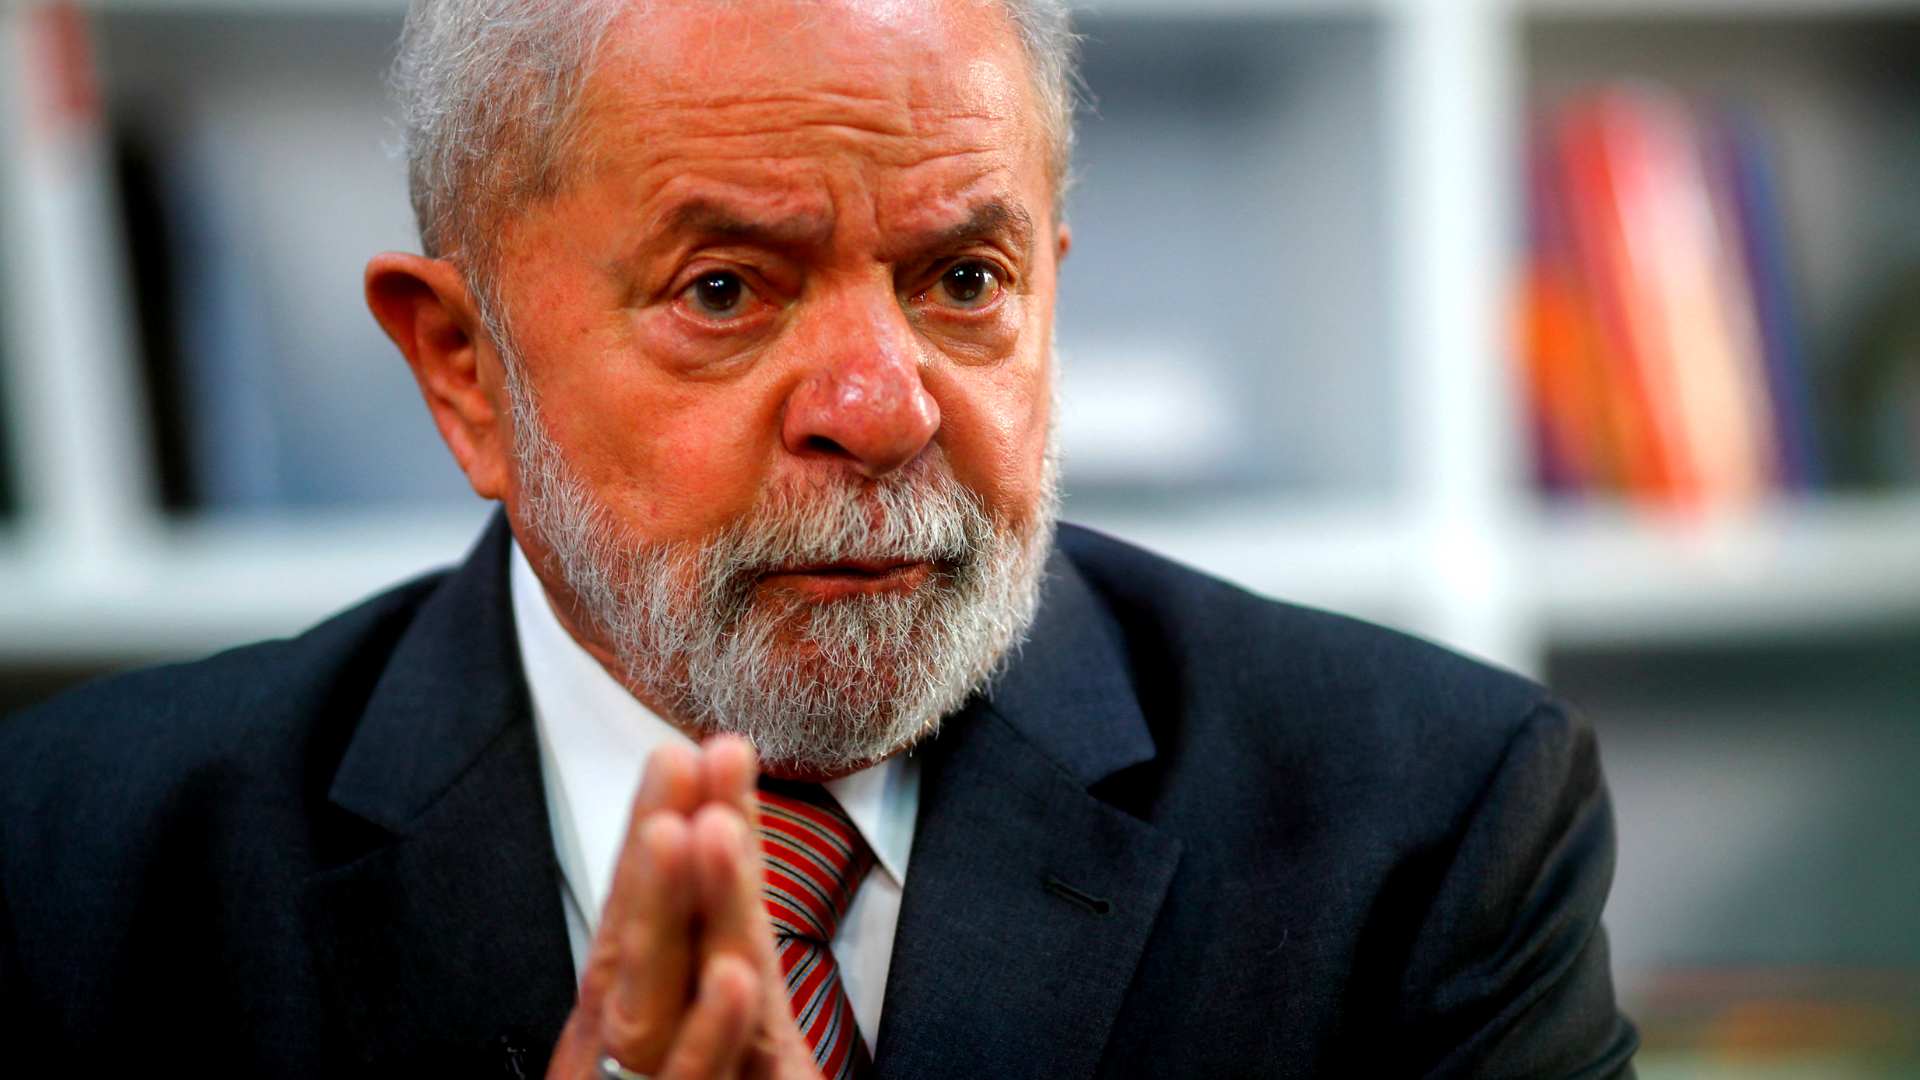 Luiz Inácio Lula da Silva (President of Brazil)